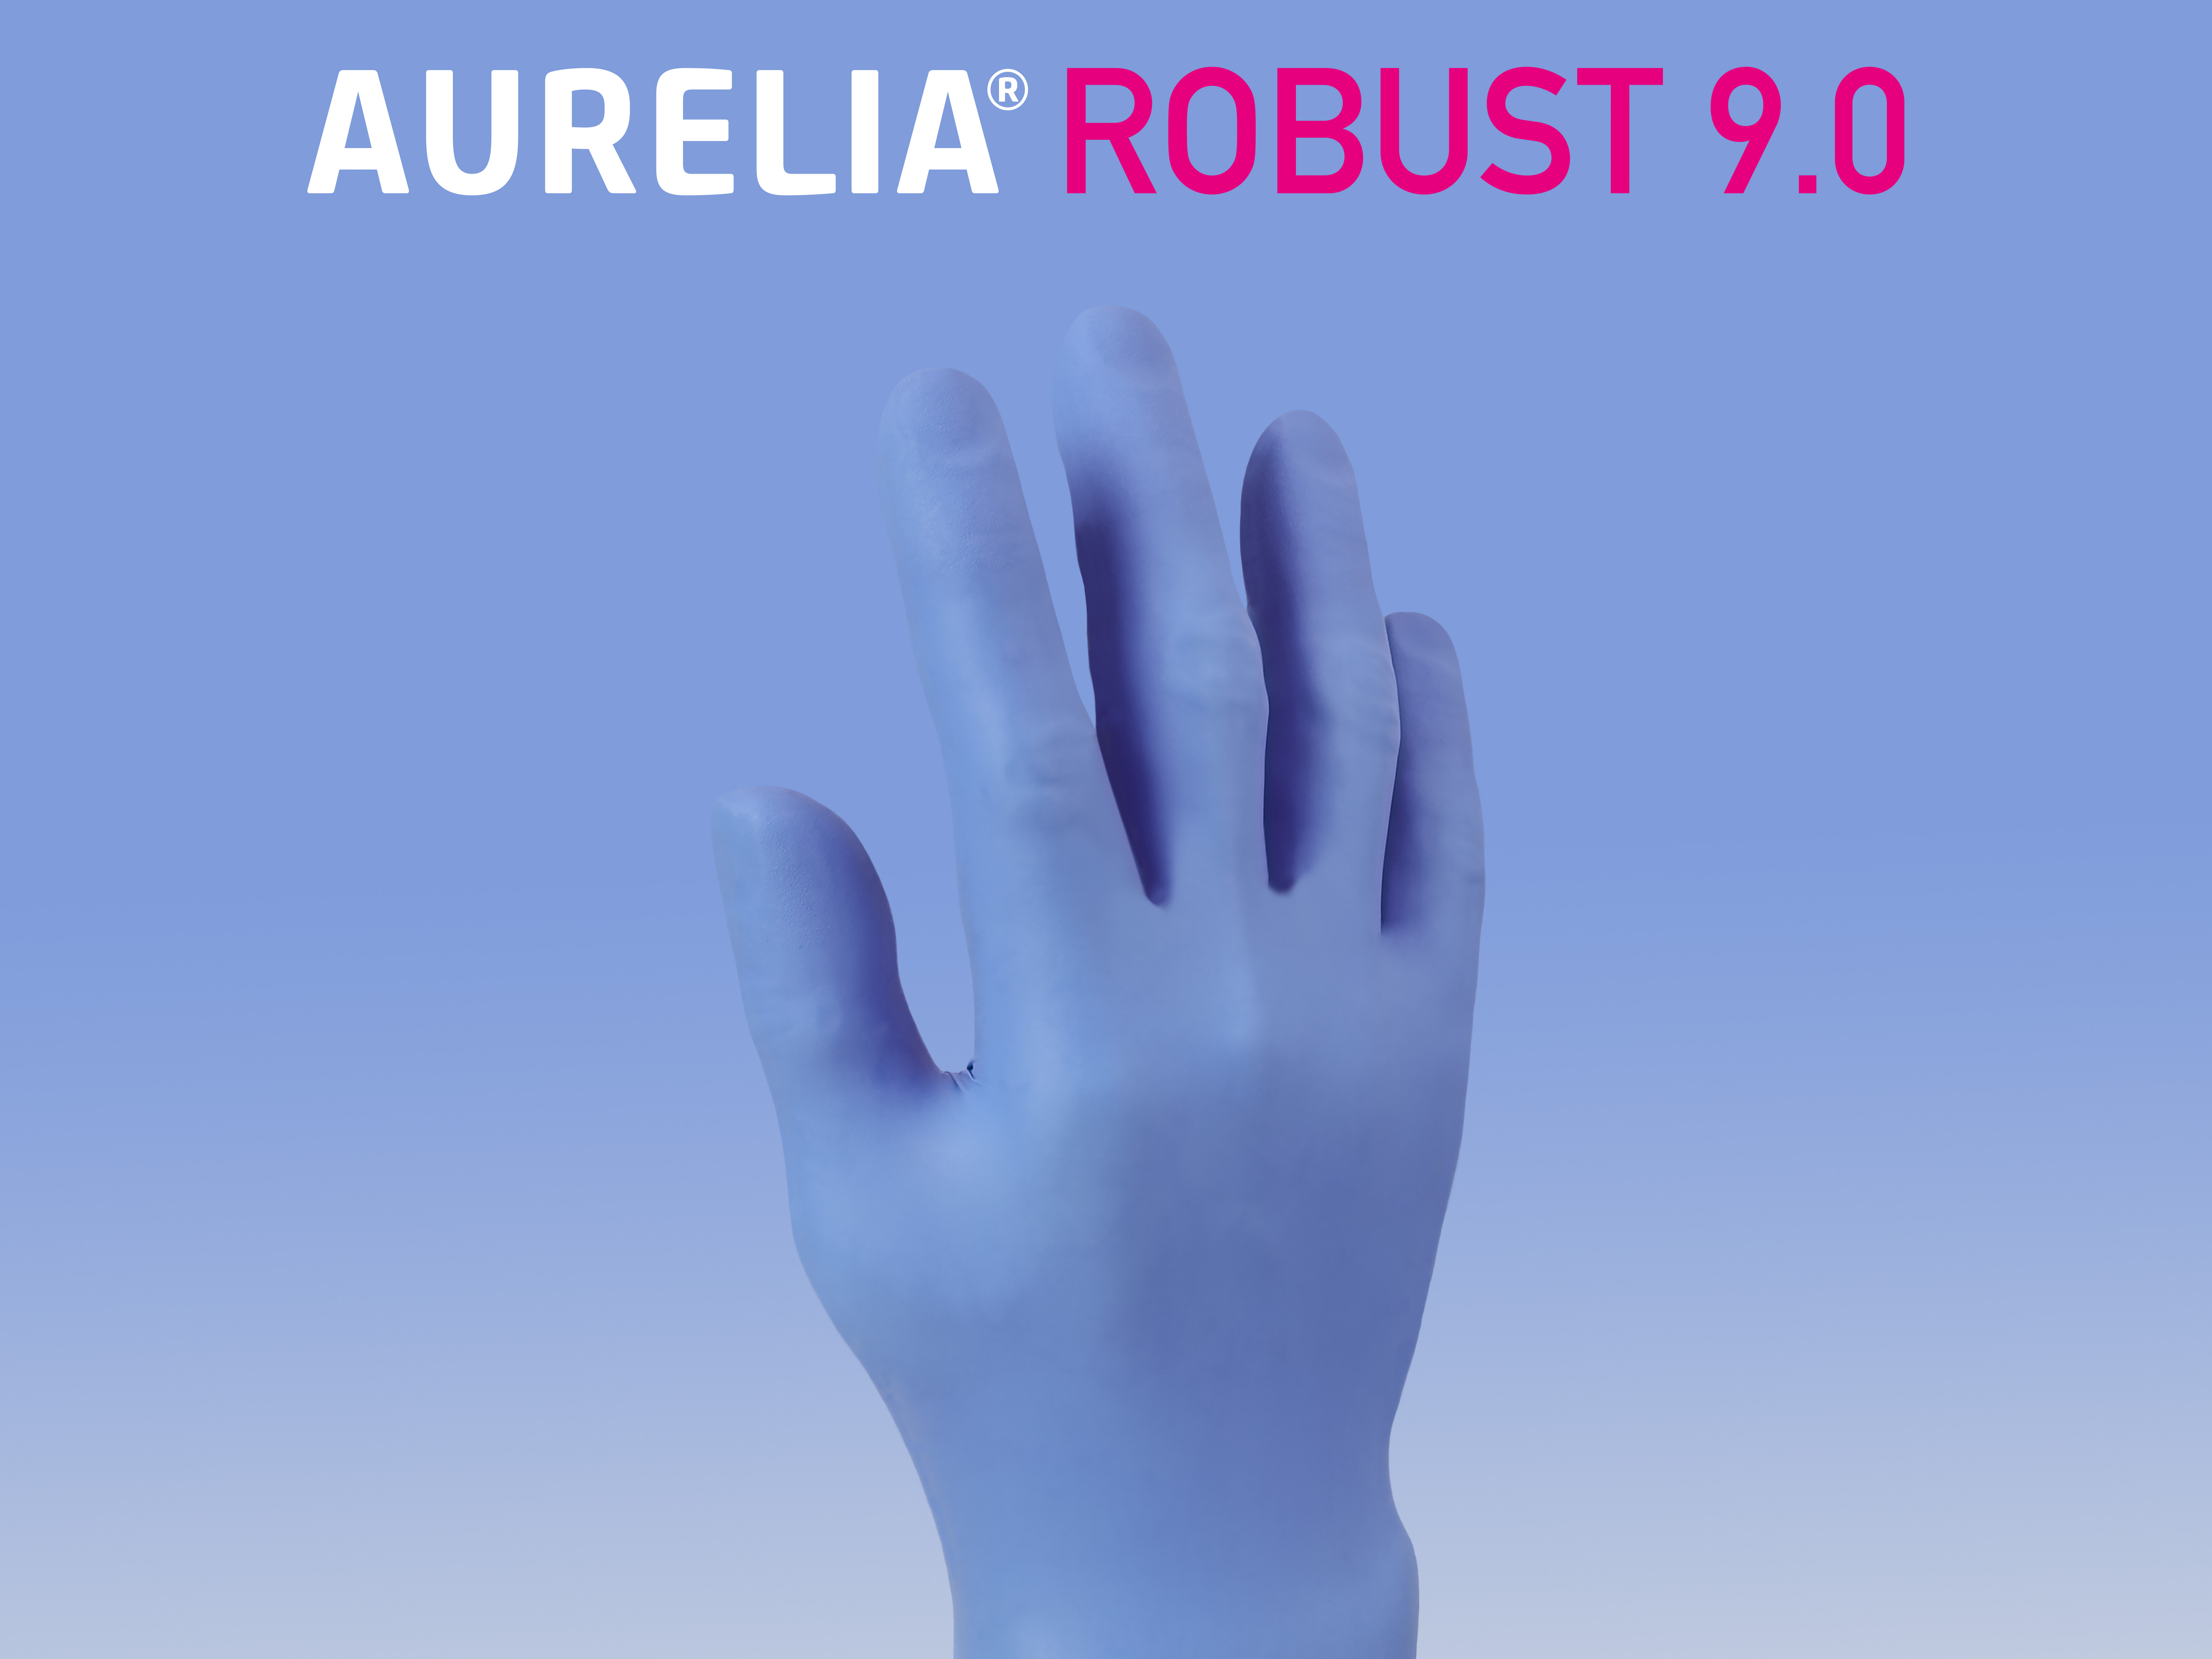 Aurelia Robust 9.0 Glove 600